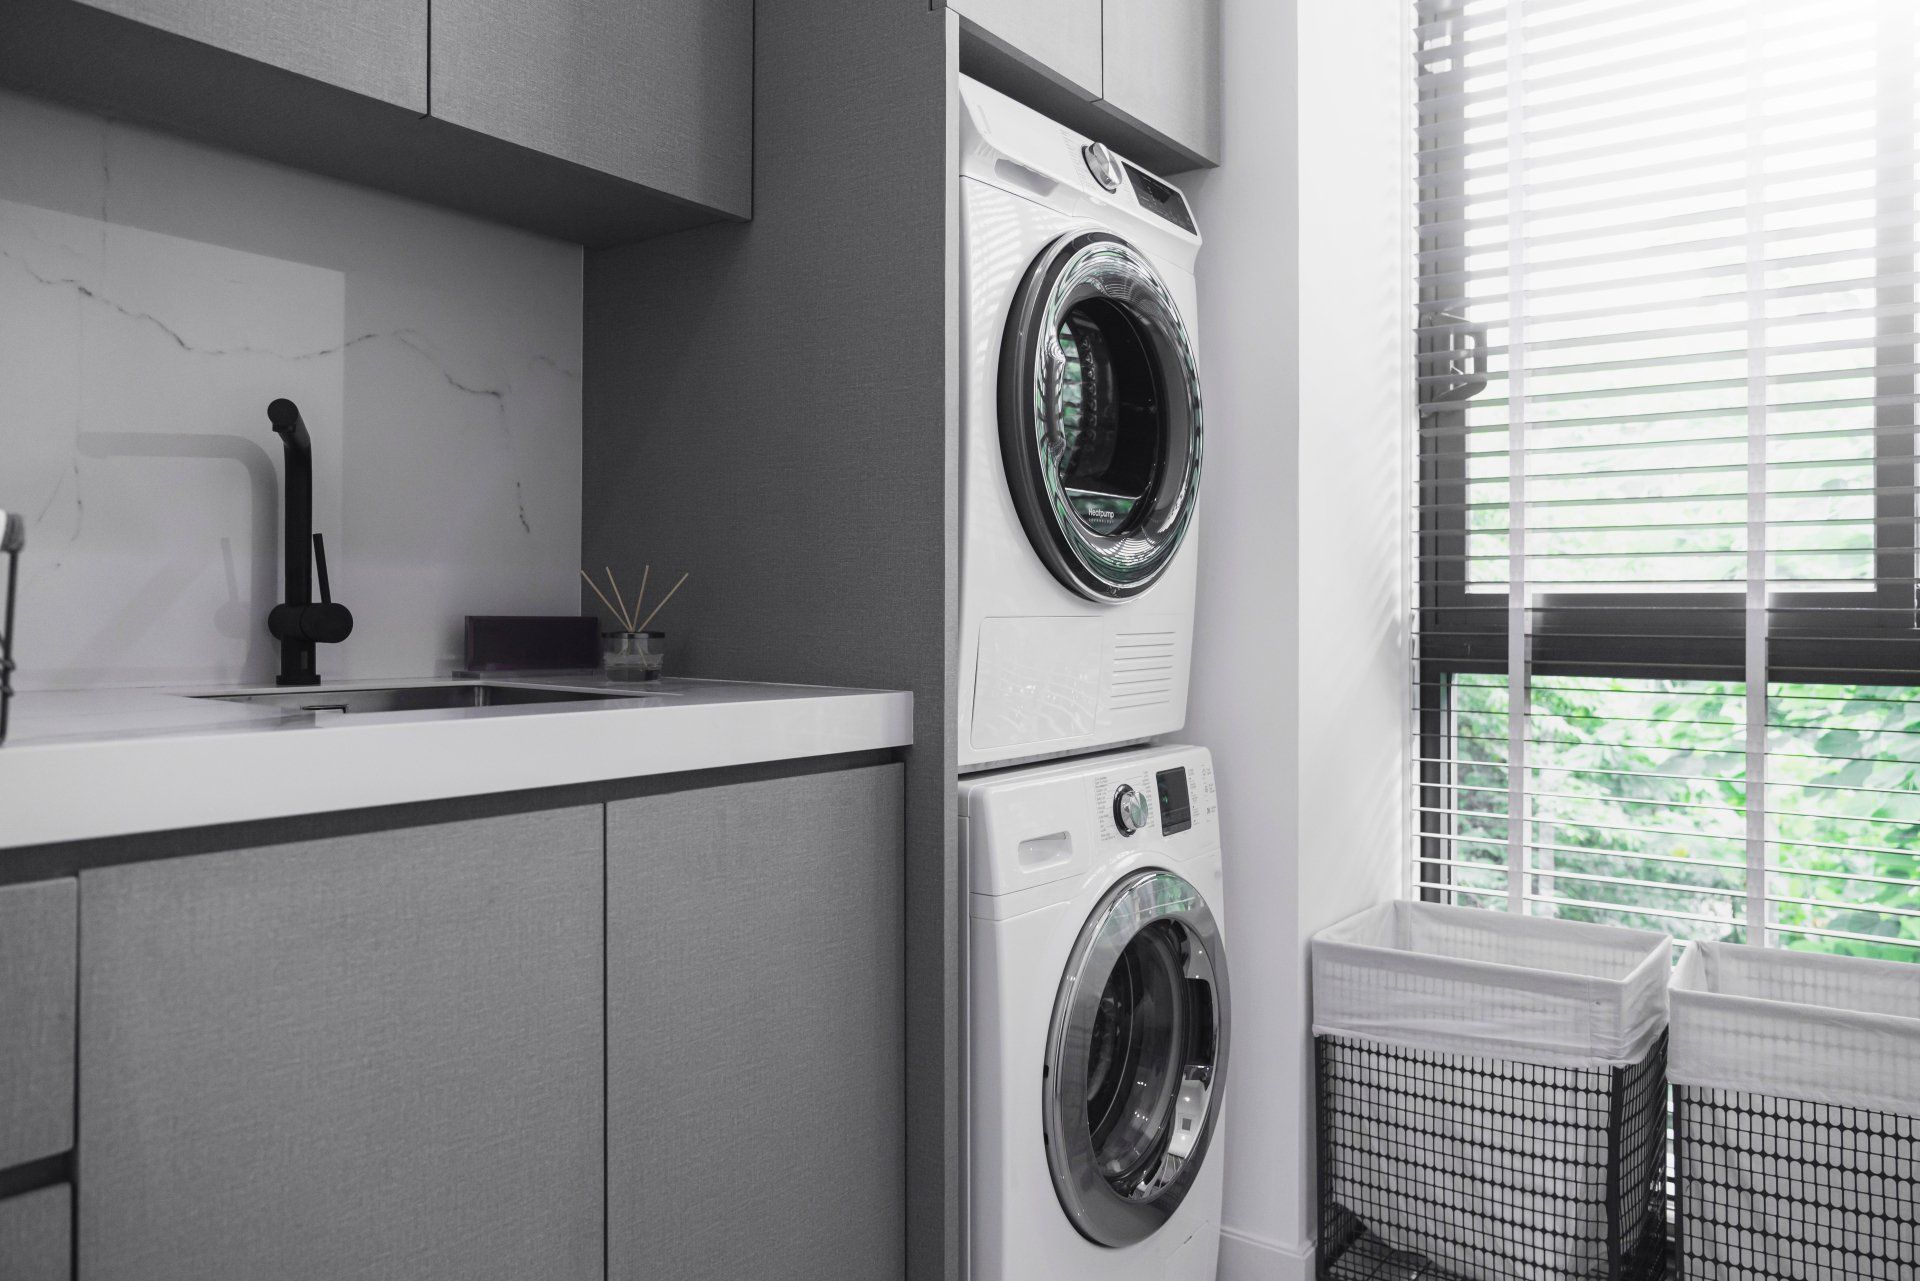  Bathroom and washing machine— Laundry Renovations in Toowoomba, QLD